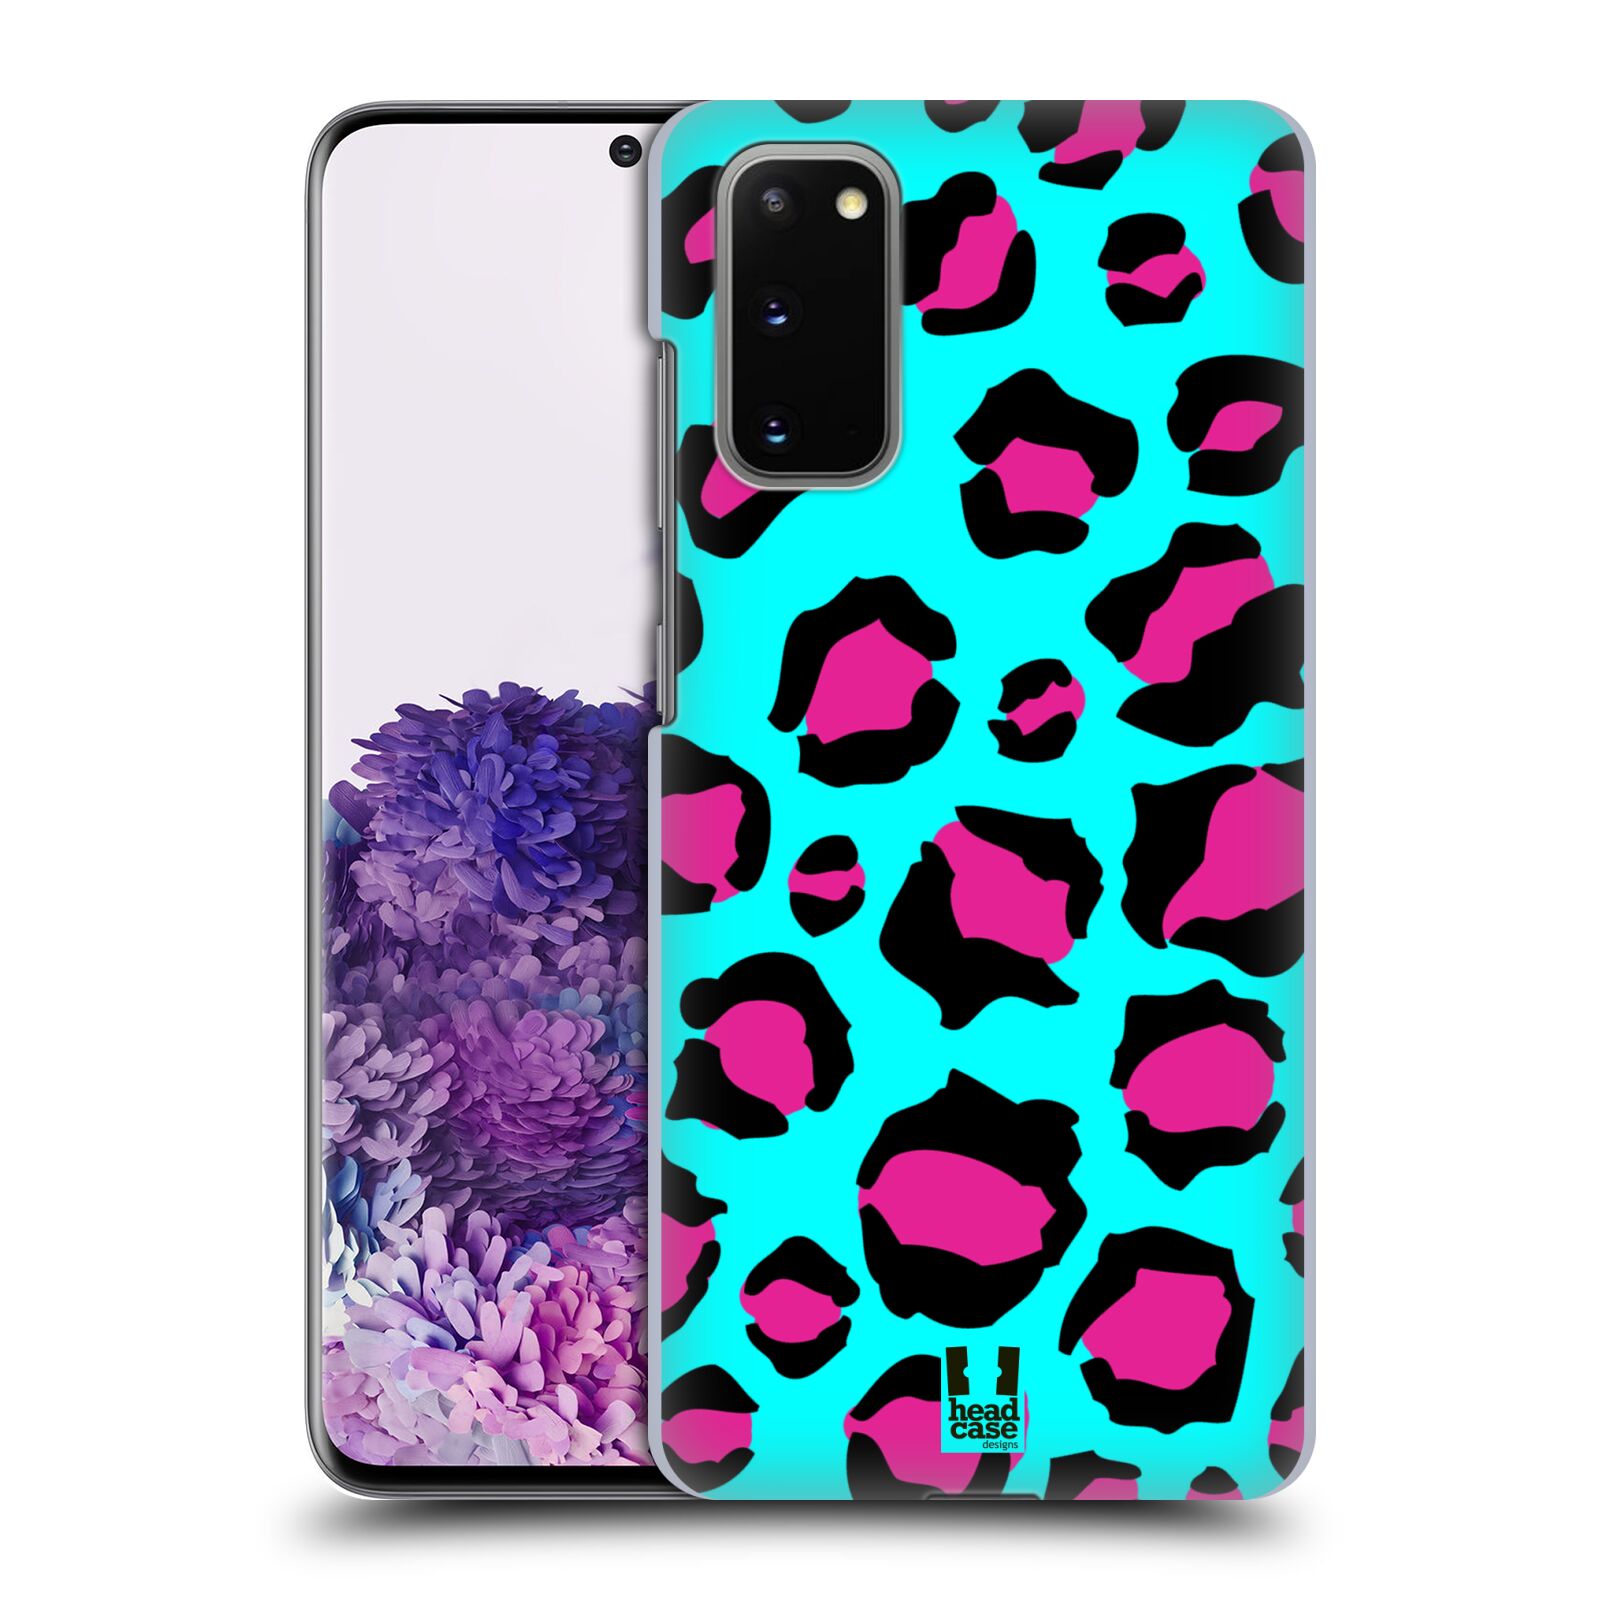 Pouzdro na mobil Samsung Galaxy S20 - HEAD CASE - vzor Divočina zvíře tyrkysový leopard